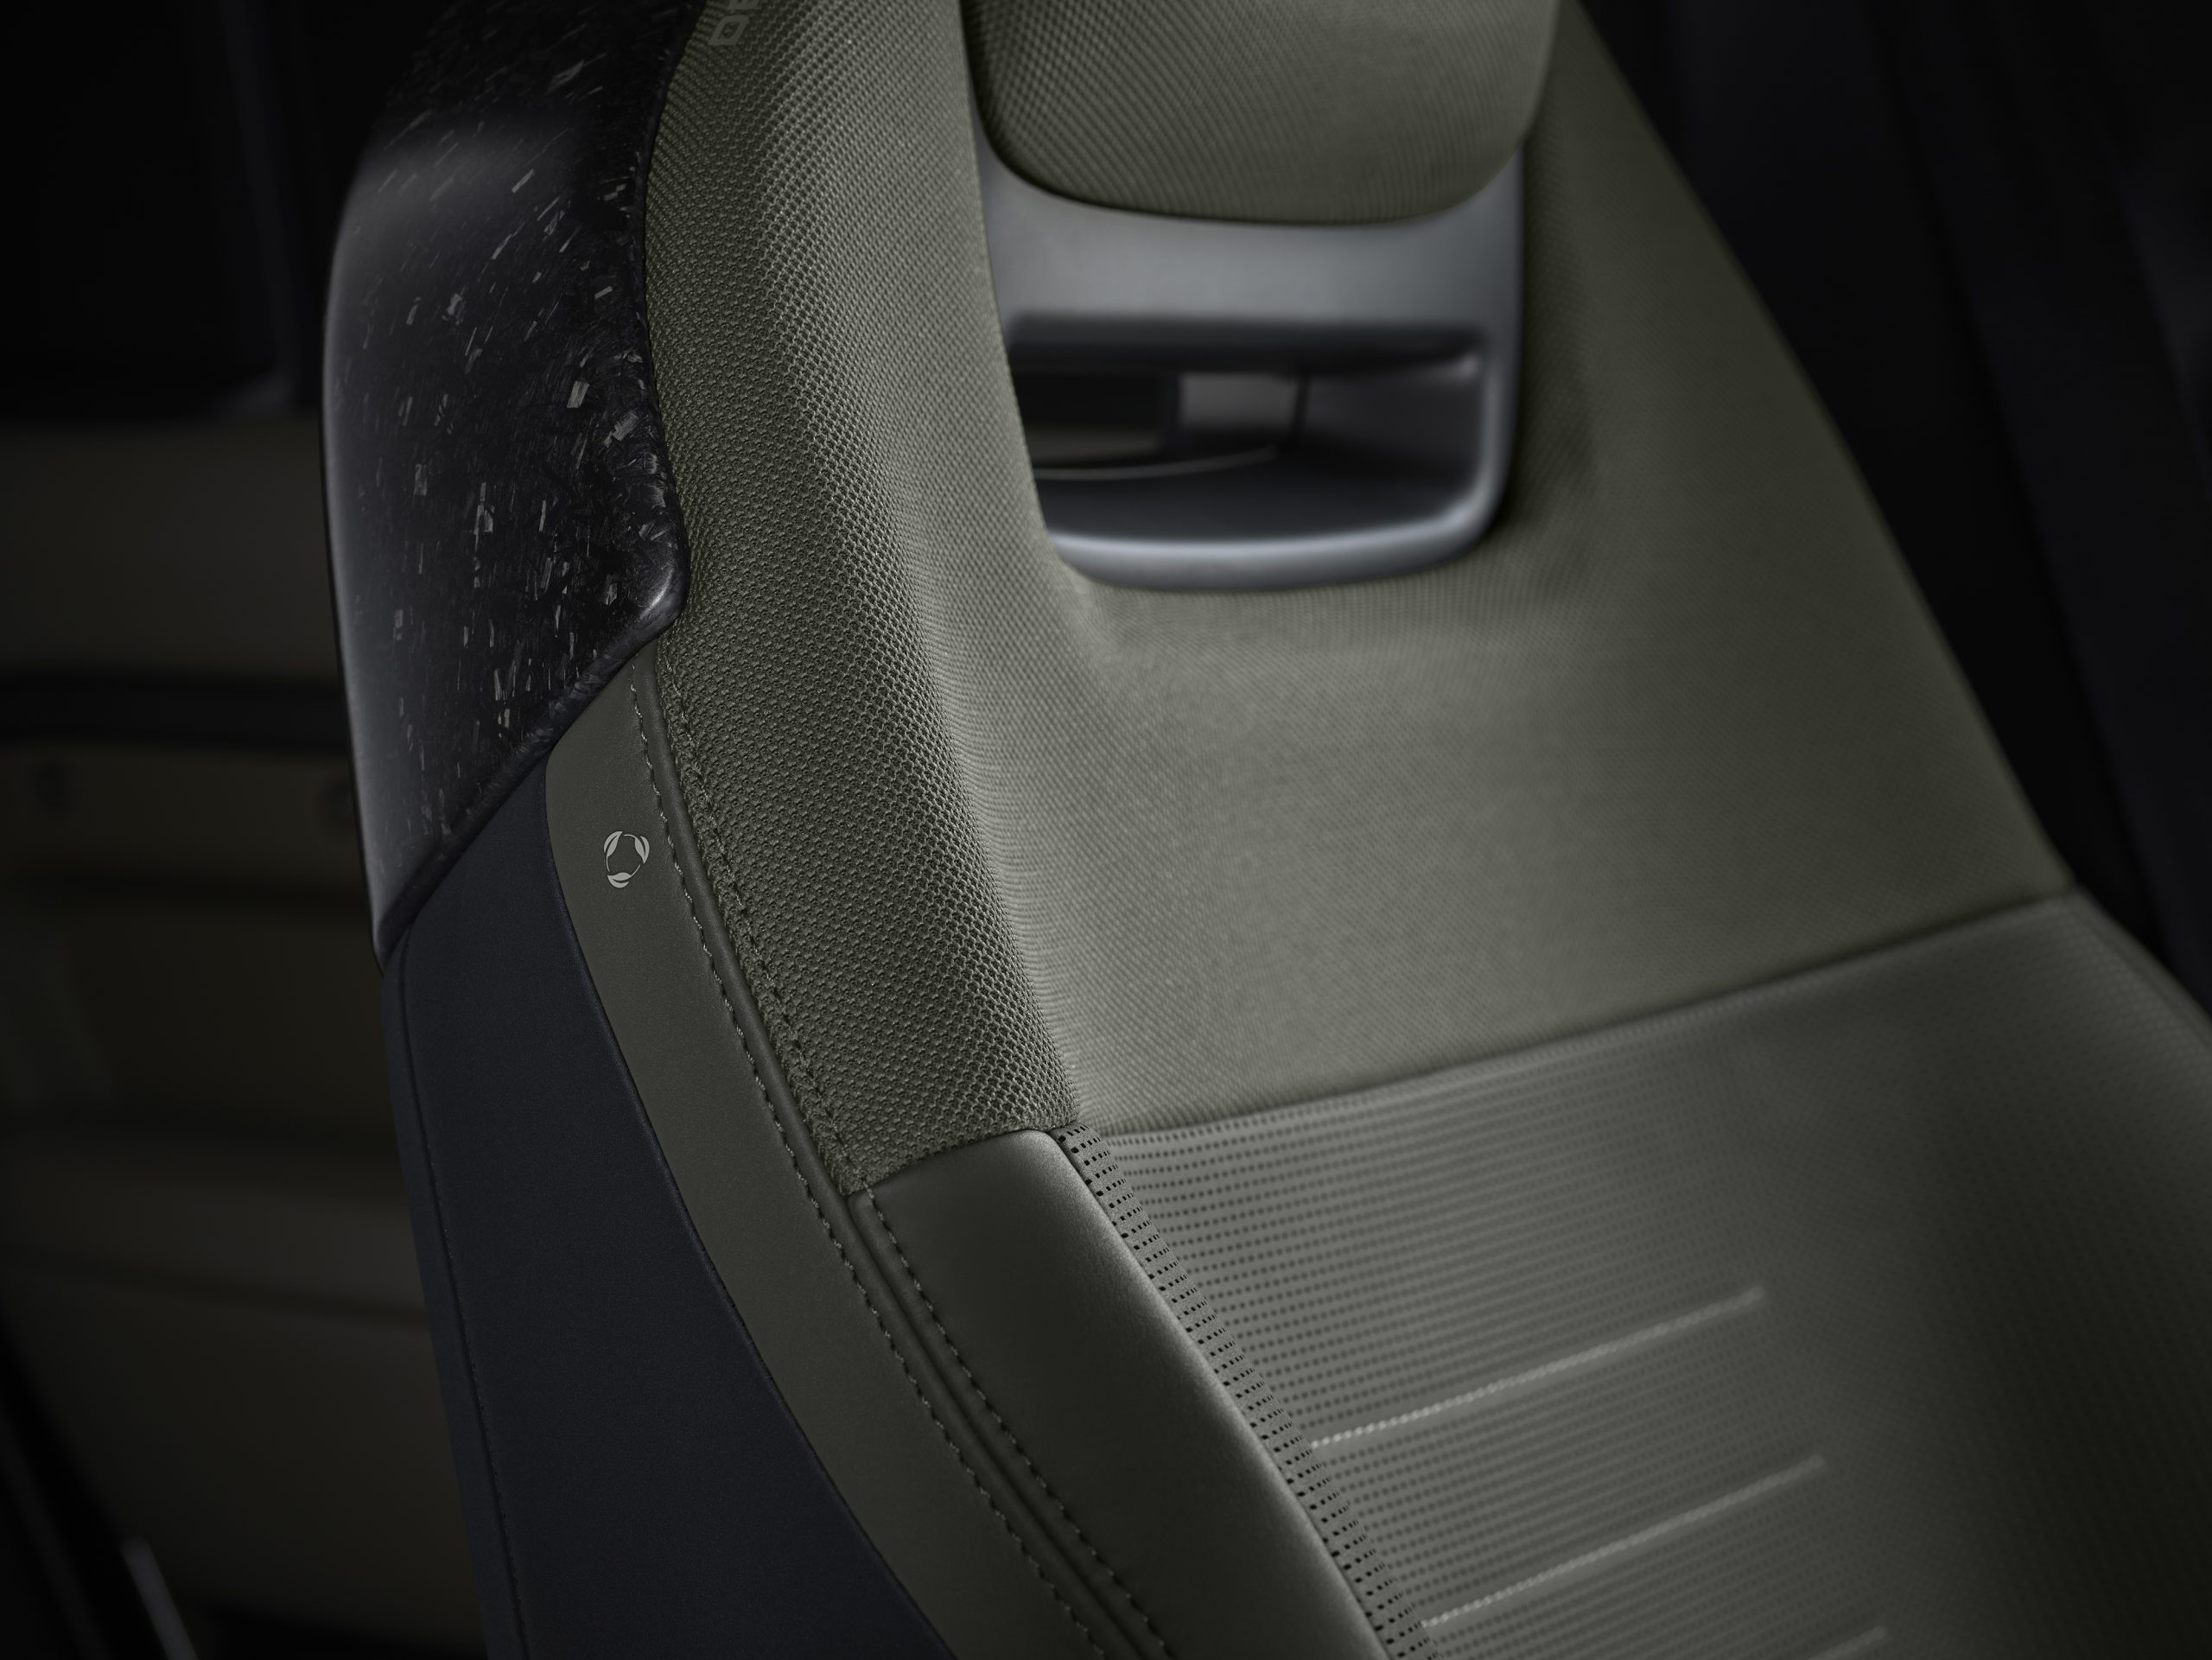 Land Rover Defender OCTA seat detail